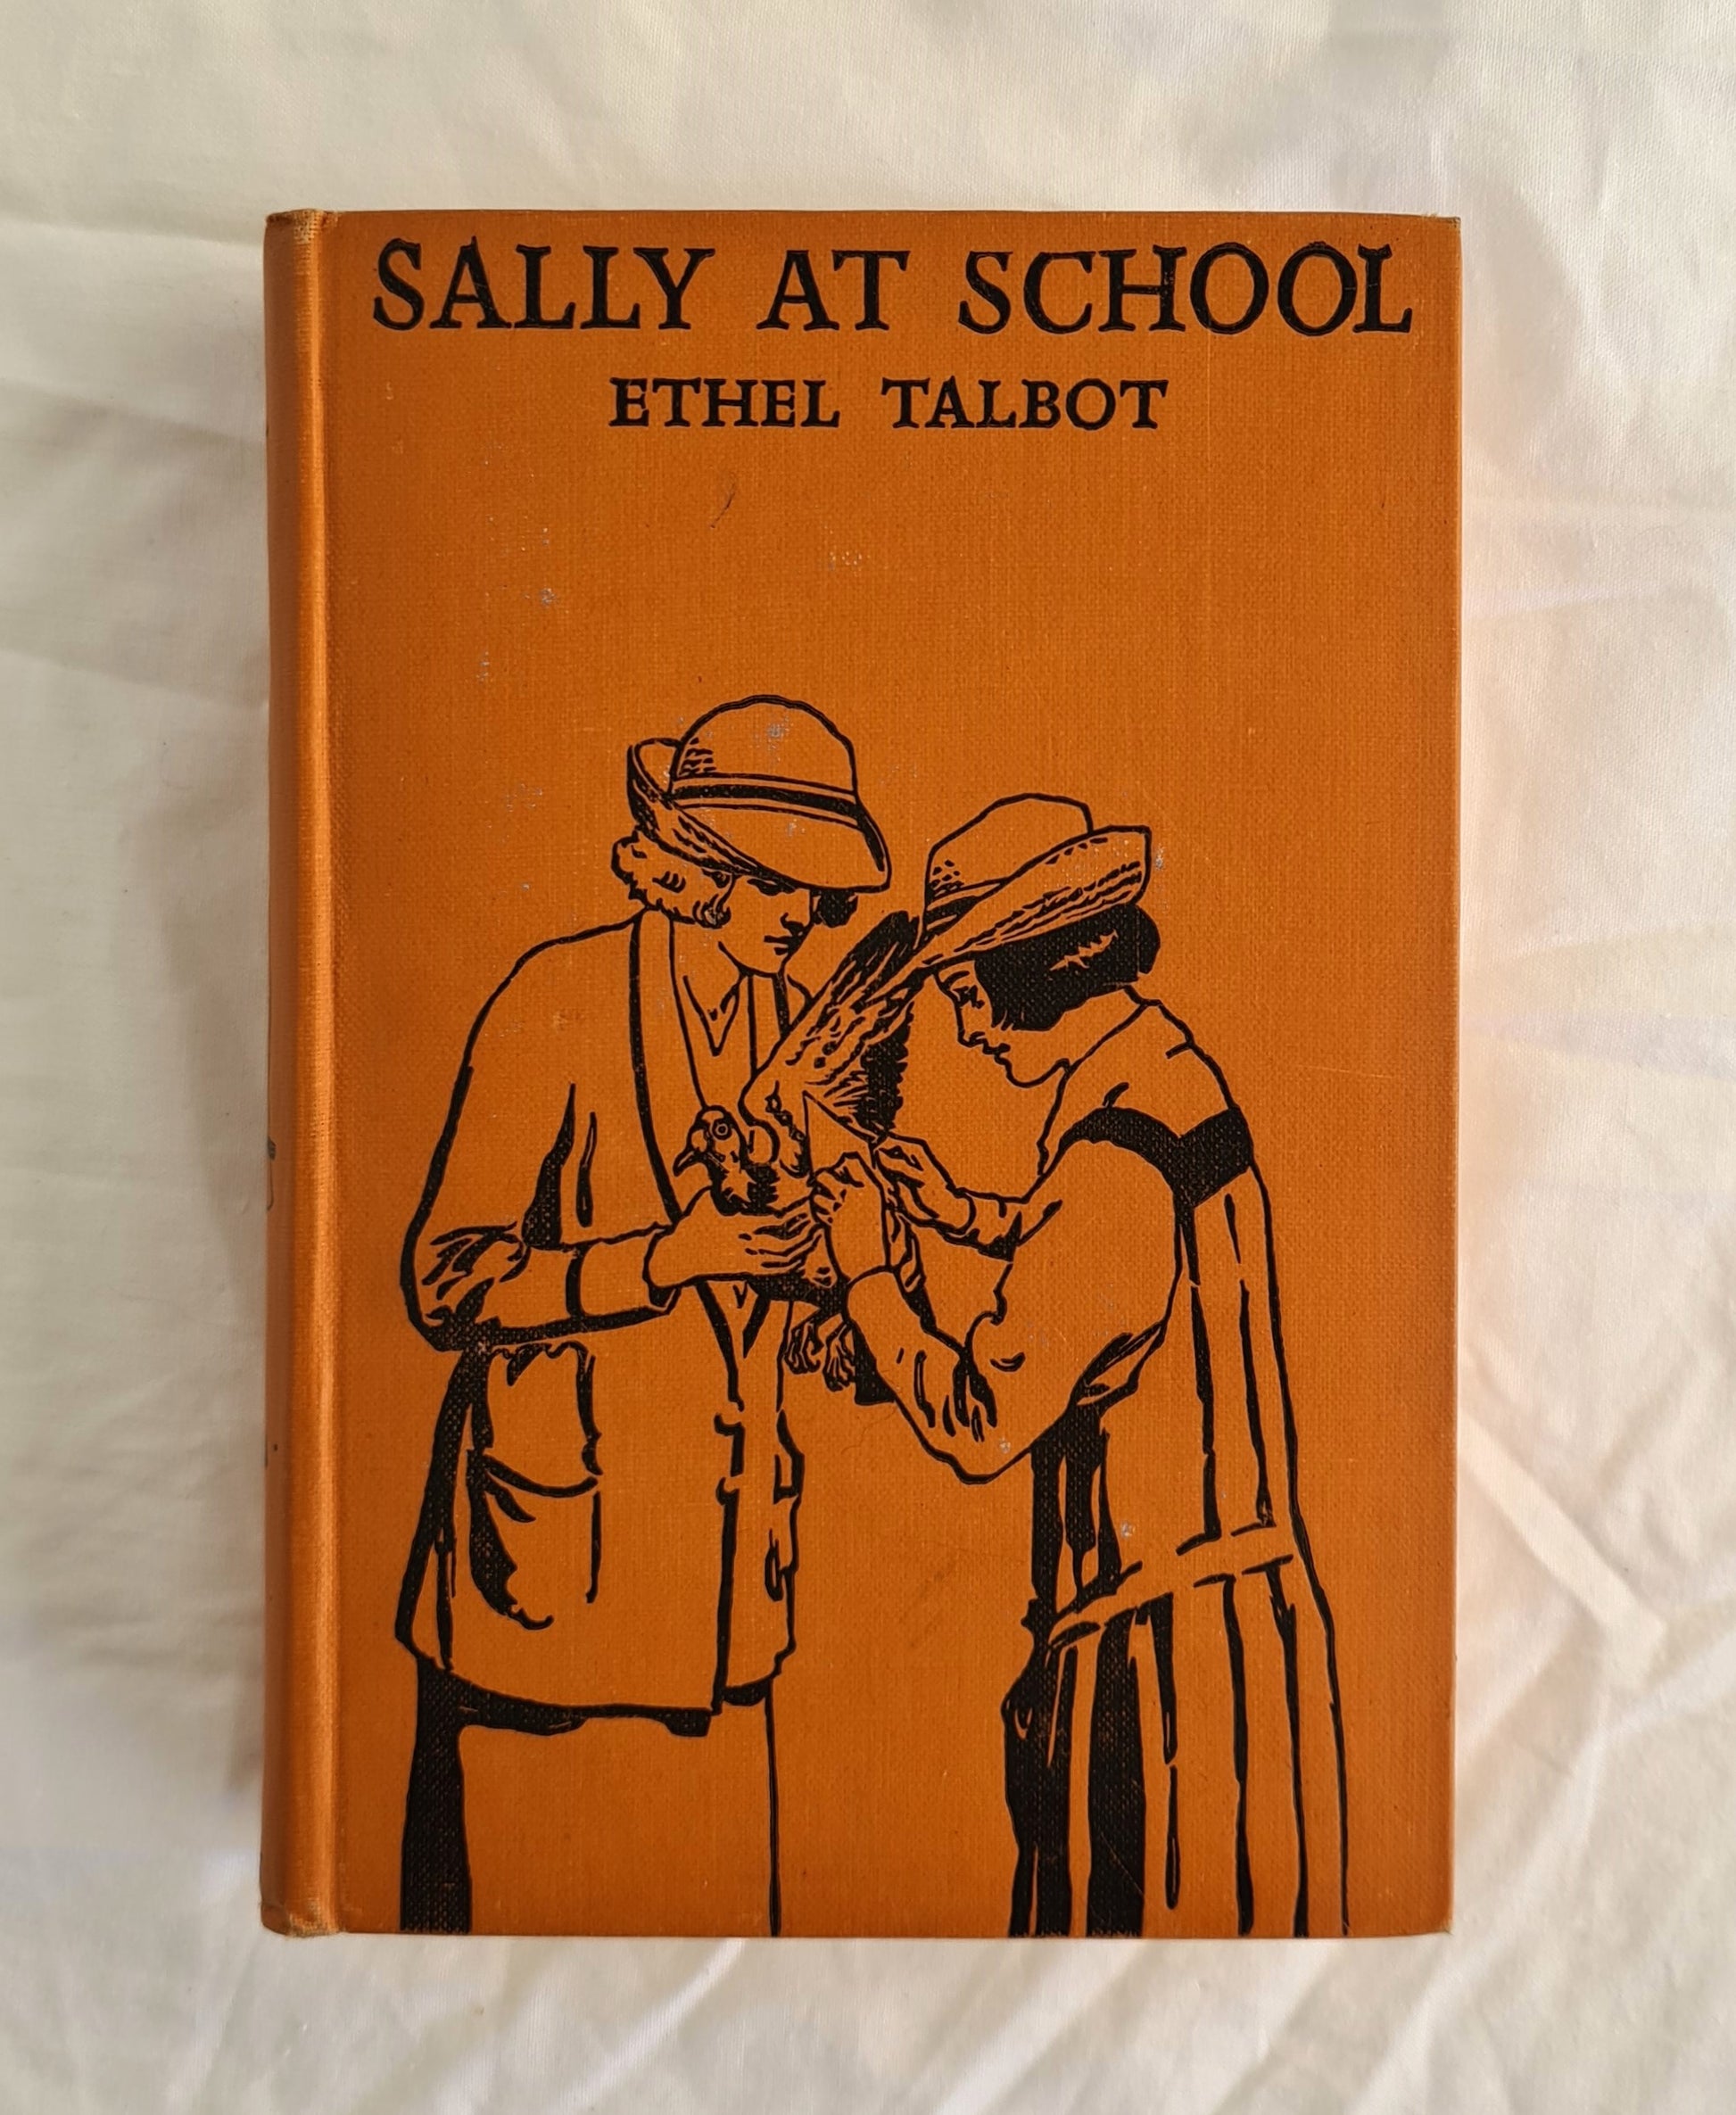 Sally At School by Ethel Talbot